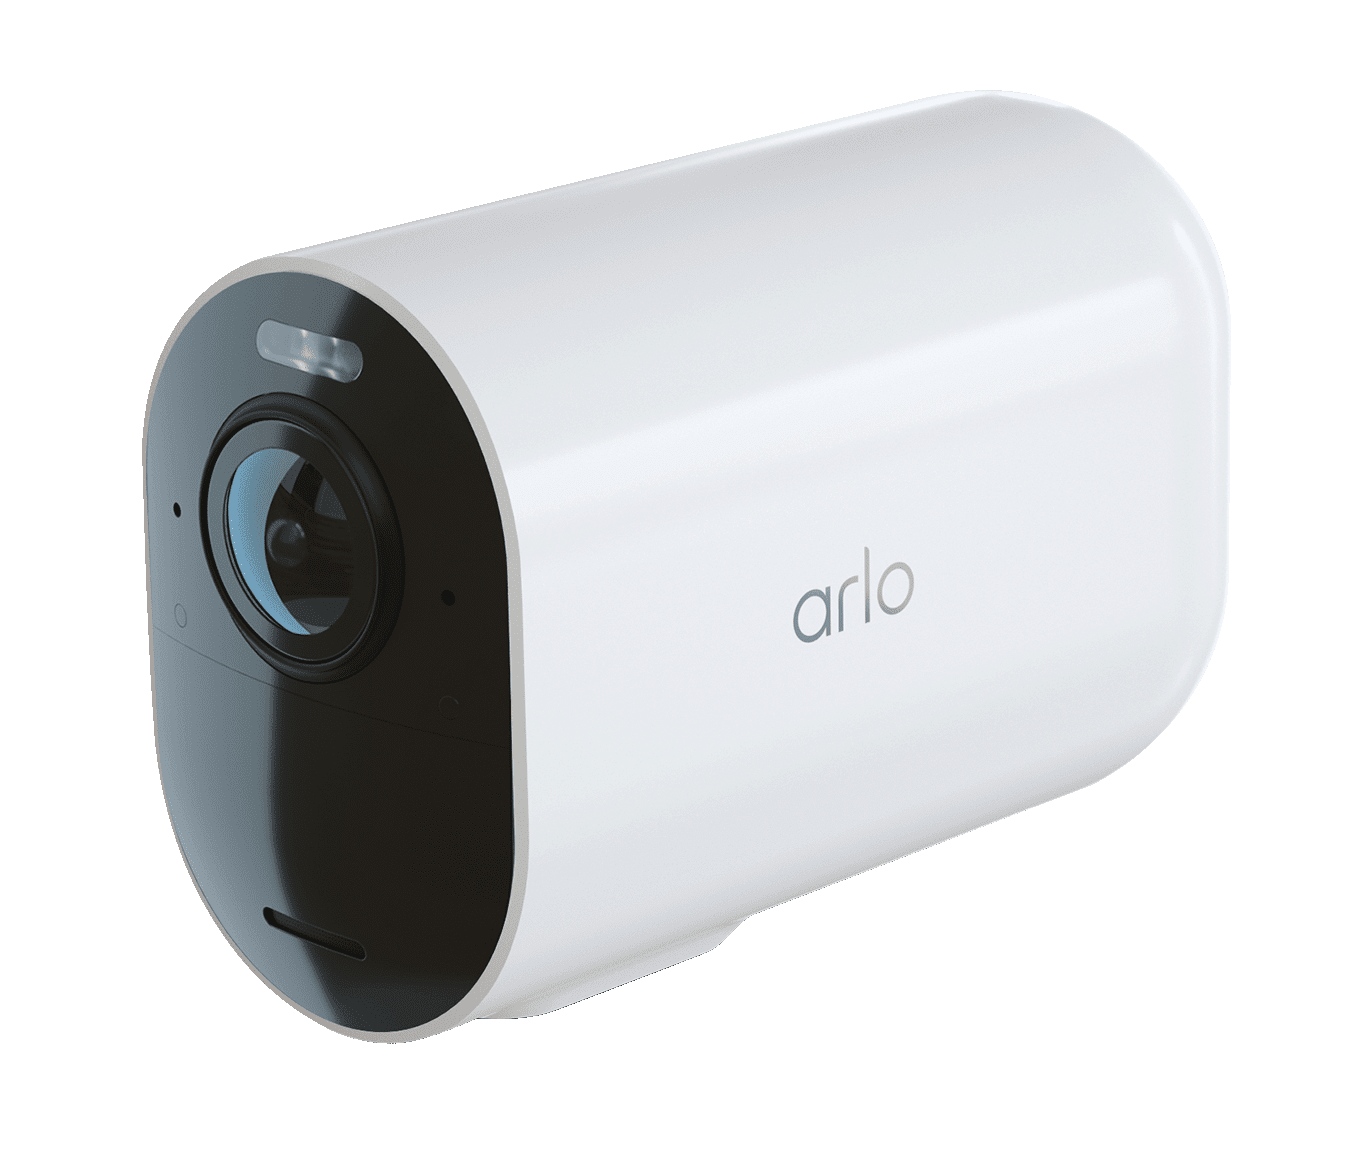 Arlo Ultra 2 XL Outdoor WiFi Security Camera